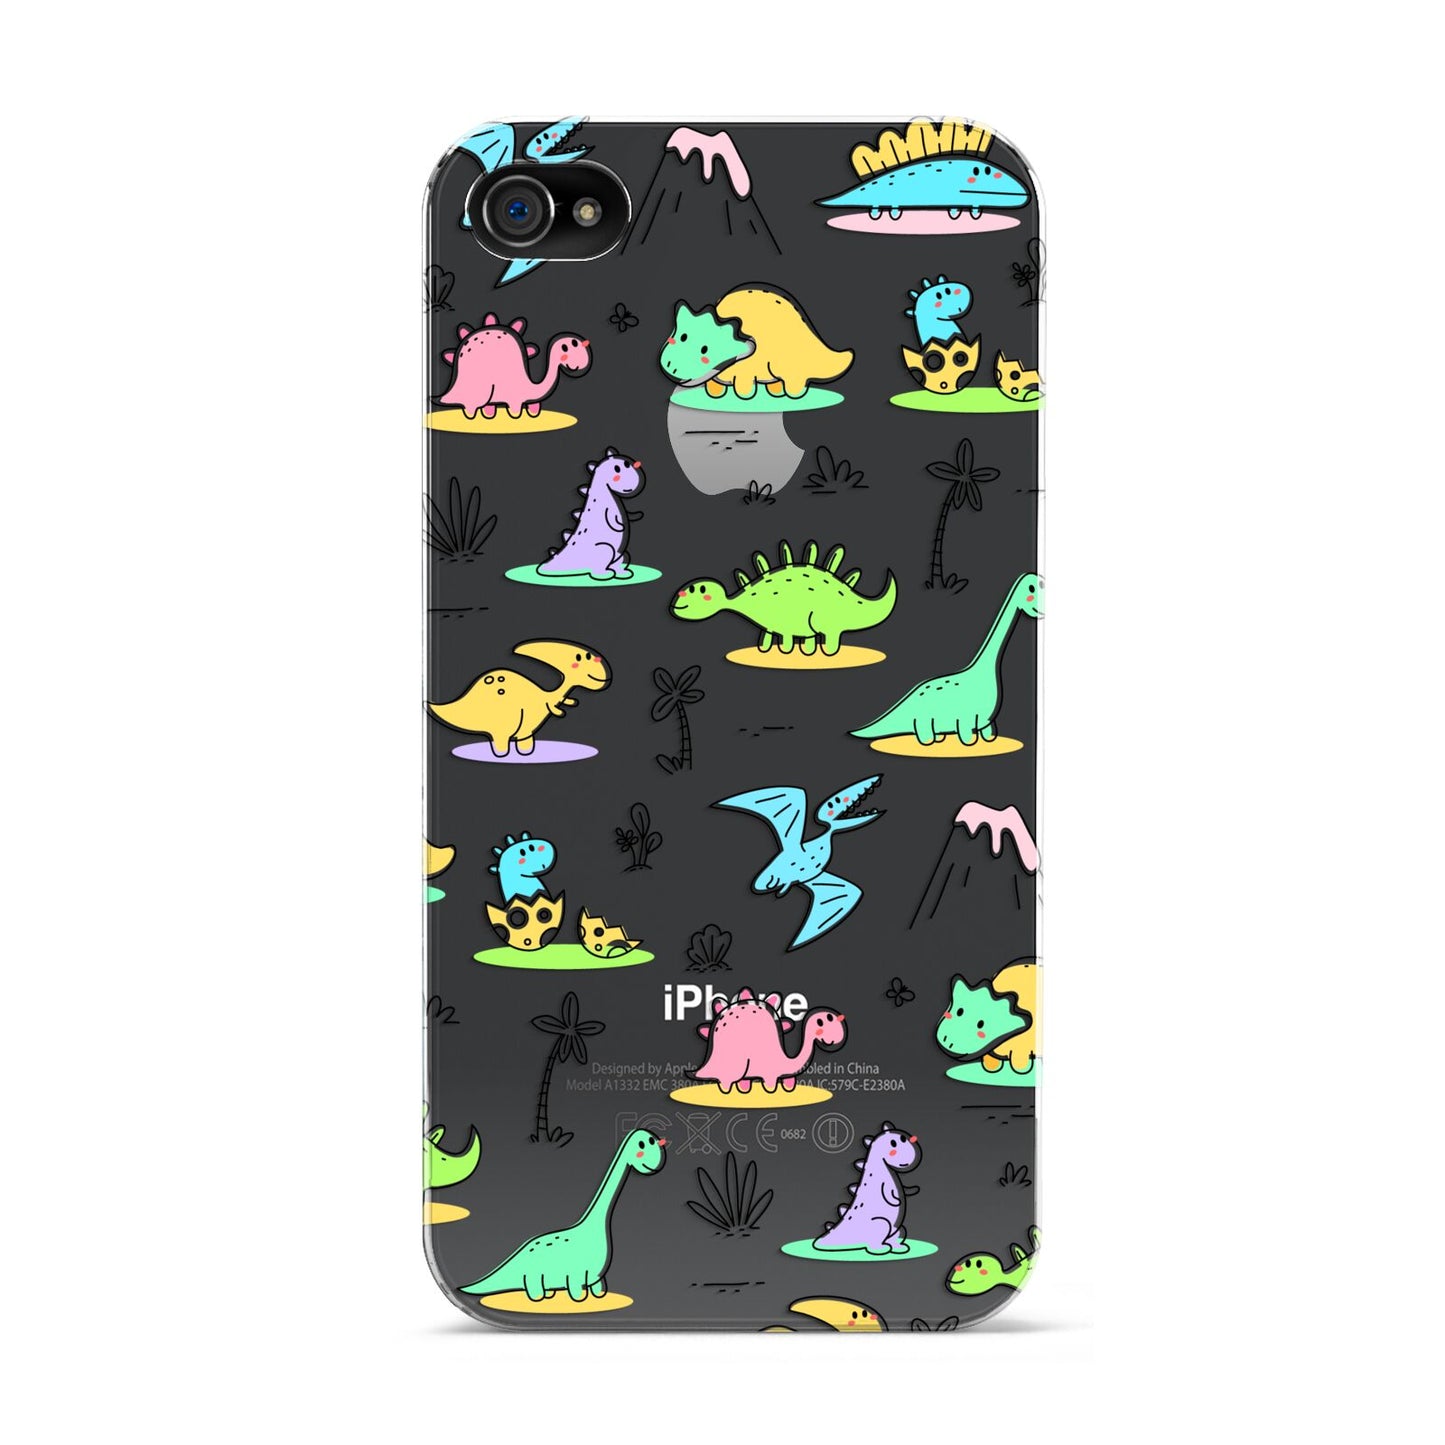 Dinosaur Apple iPhone 4s Case